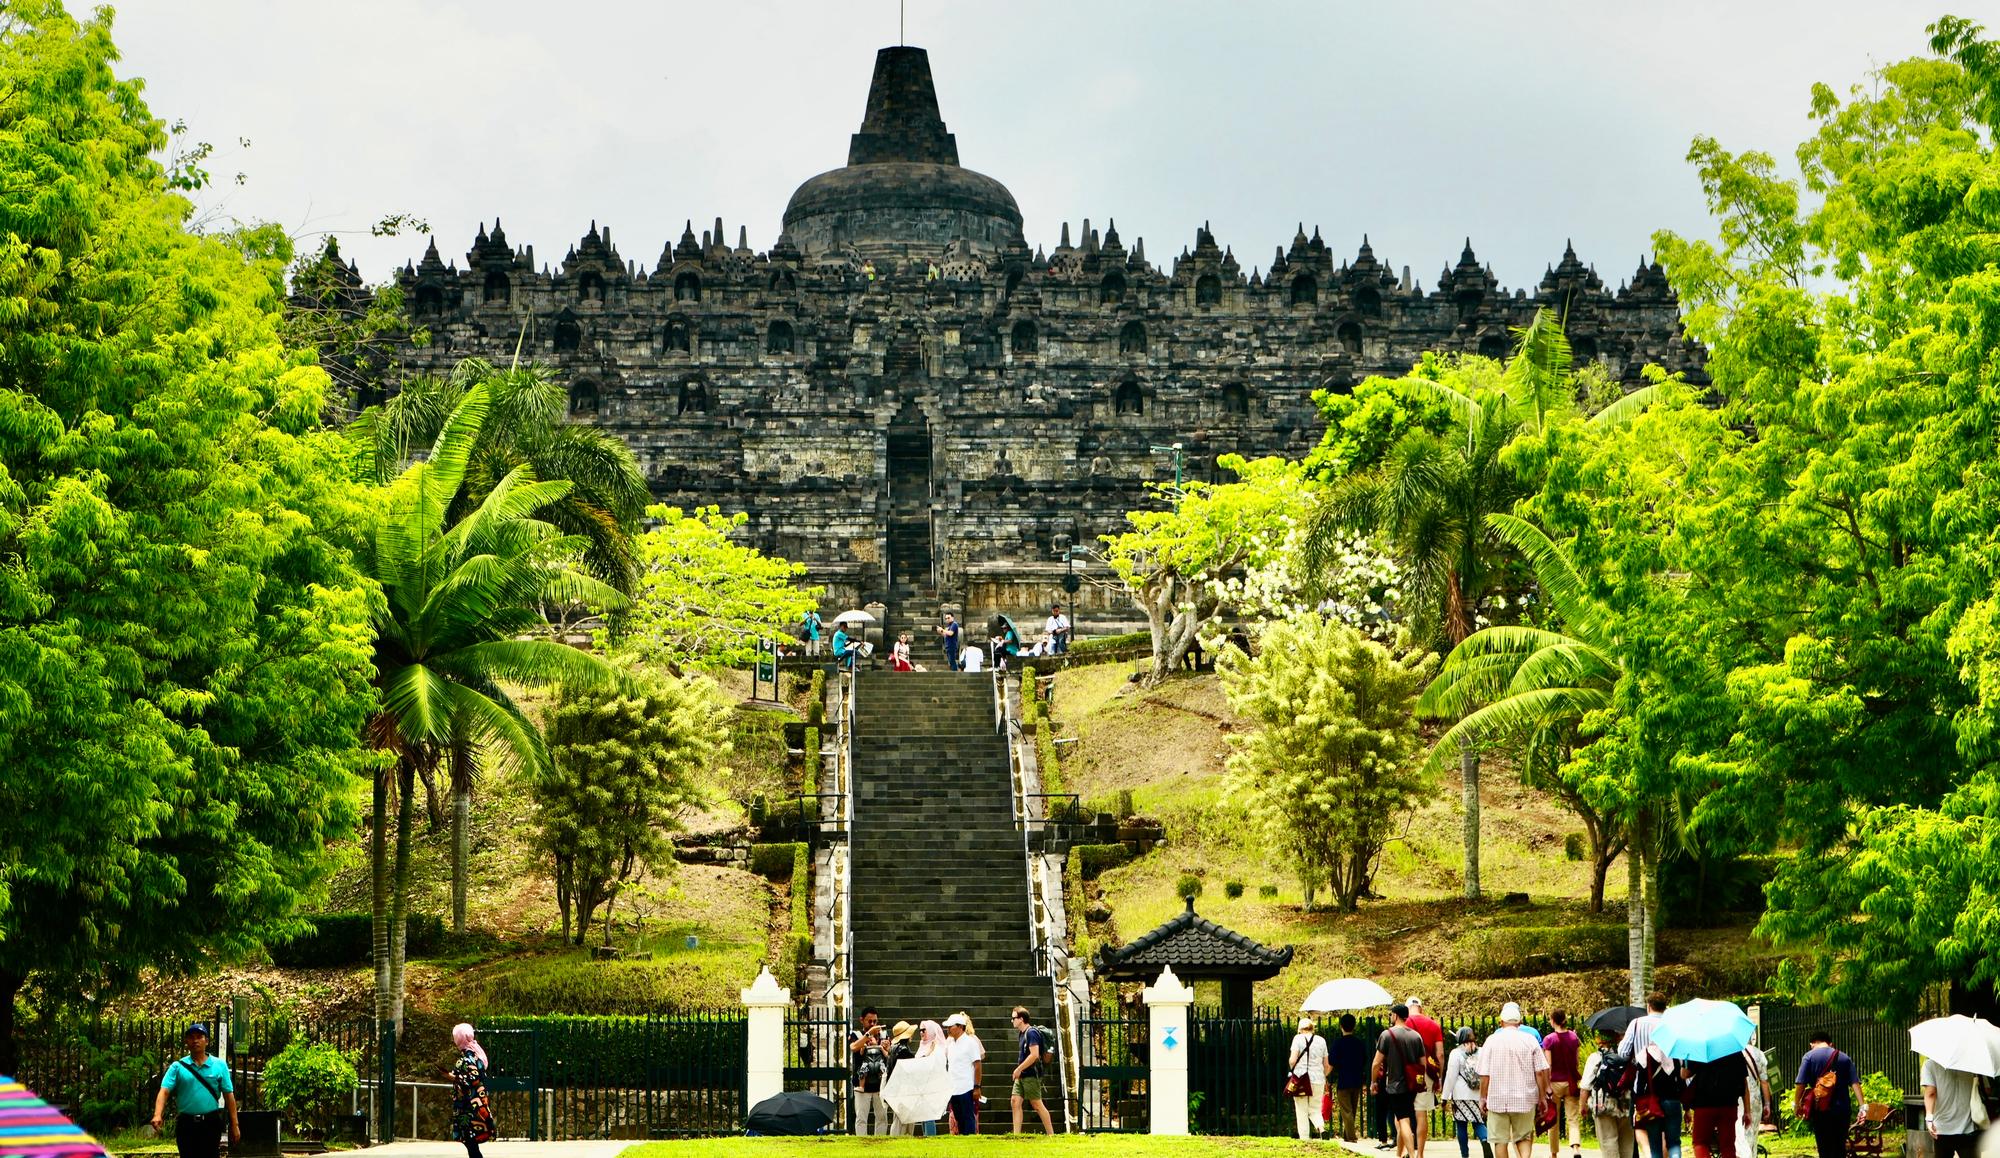 Entrance to the Borobudur Temple